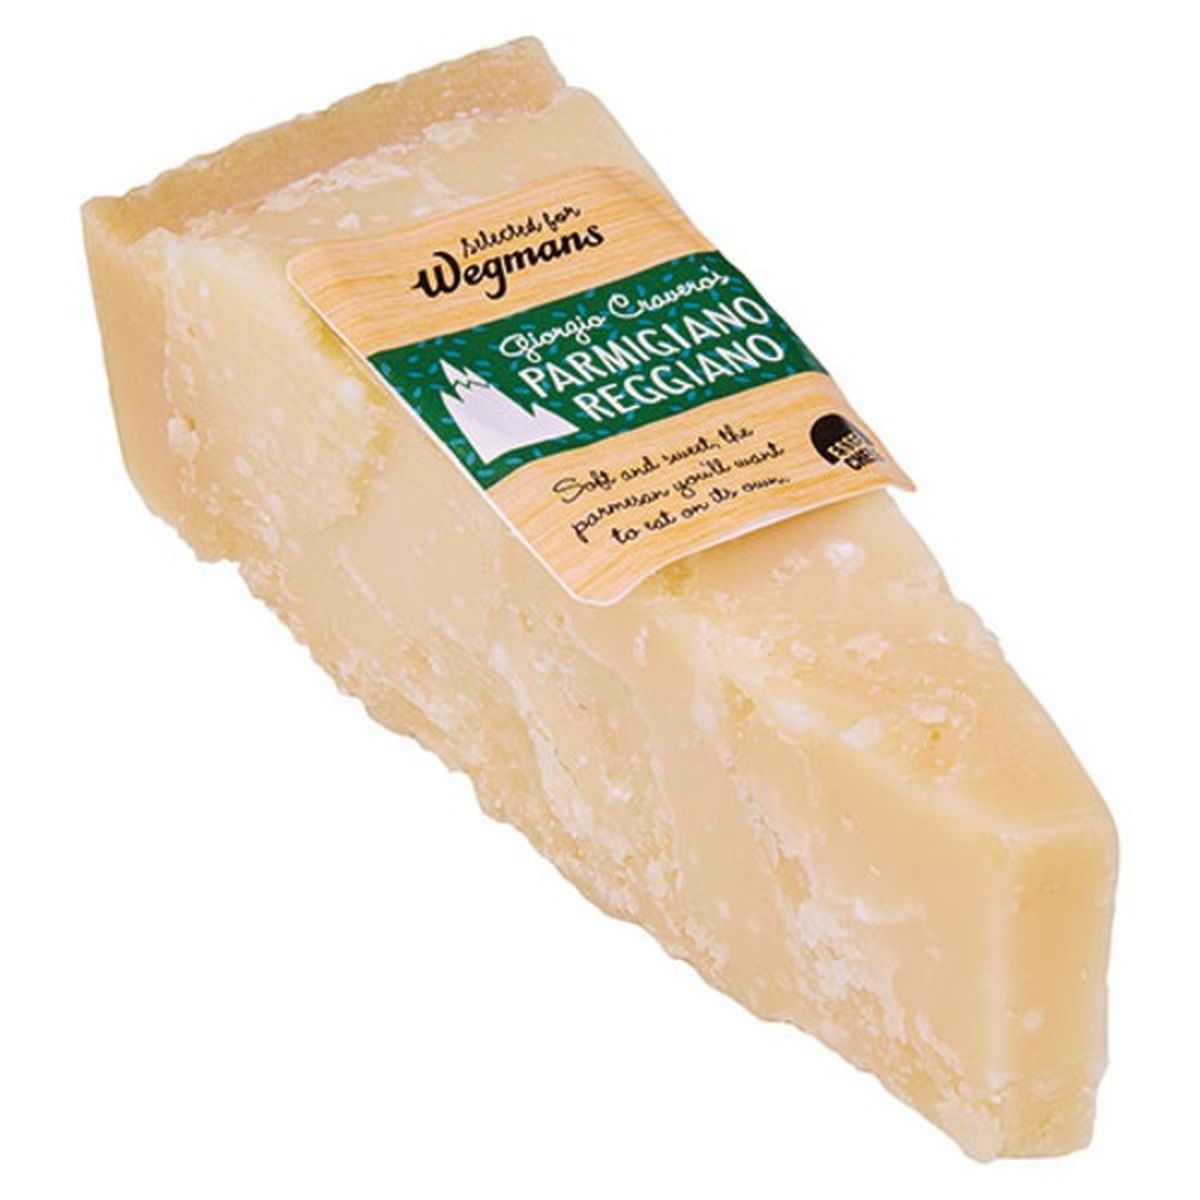 Calories in Wegmans Parmigiano Reggiano Cheese